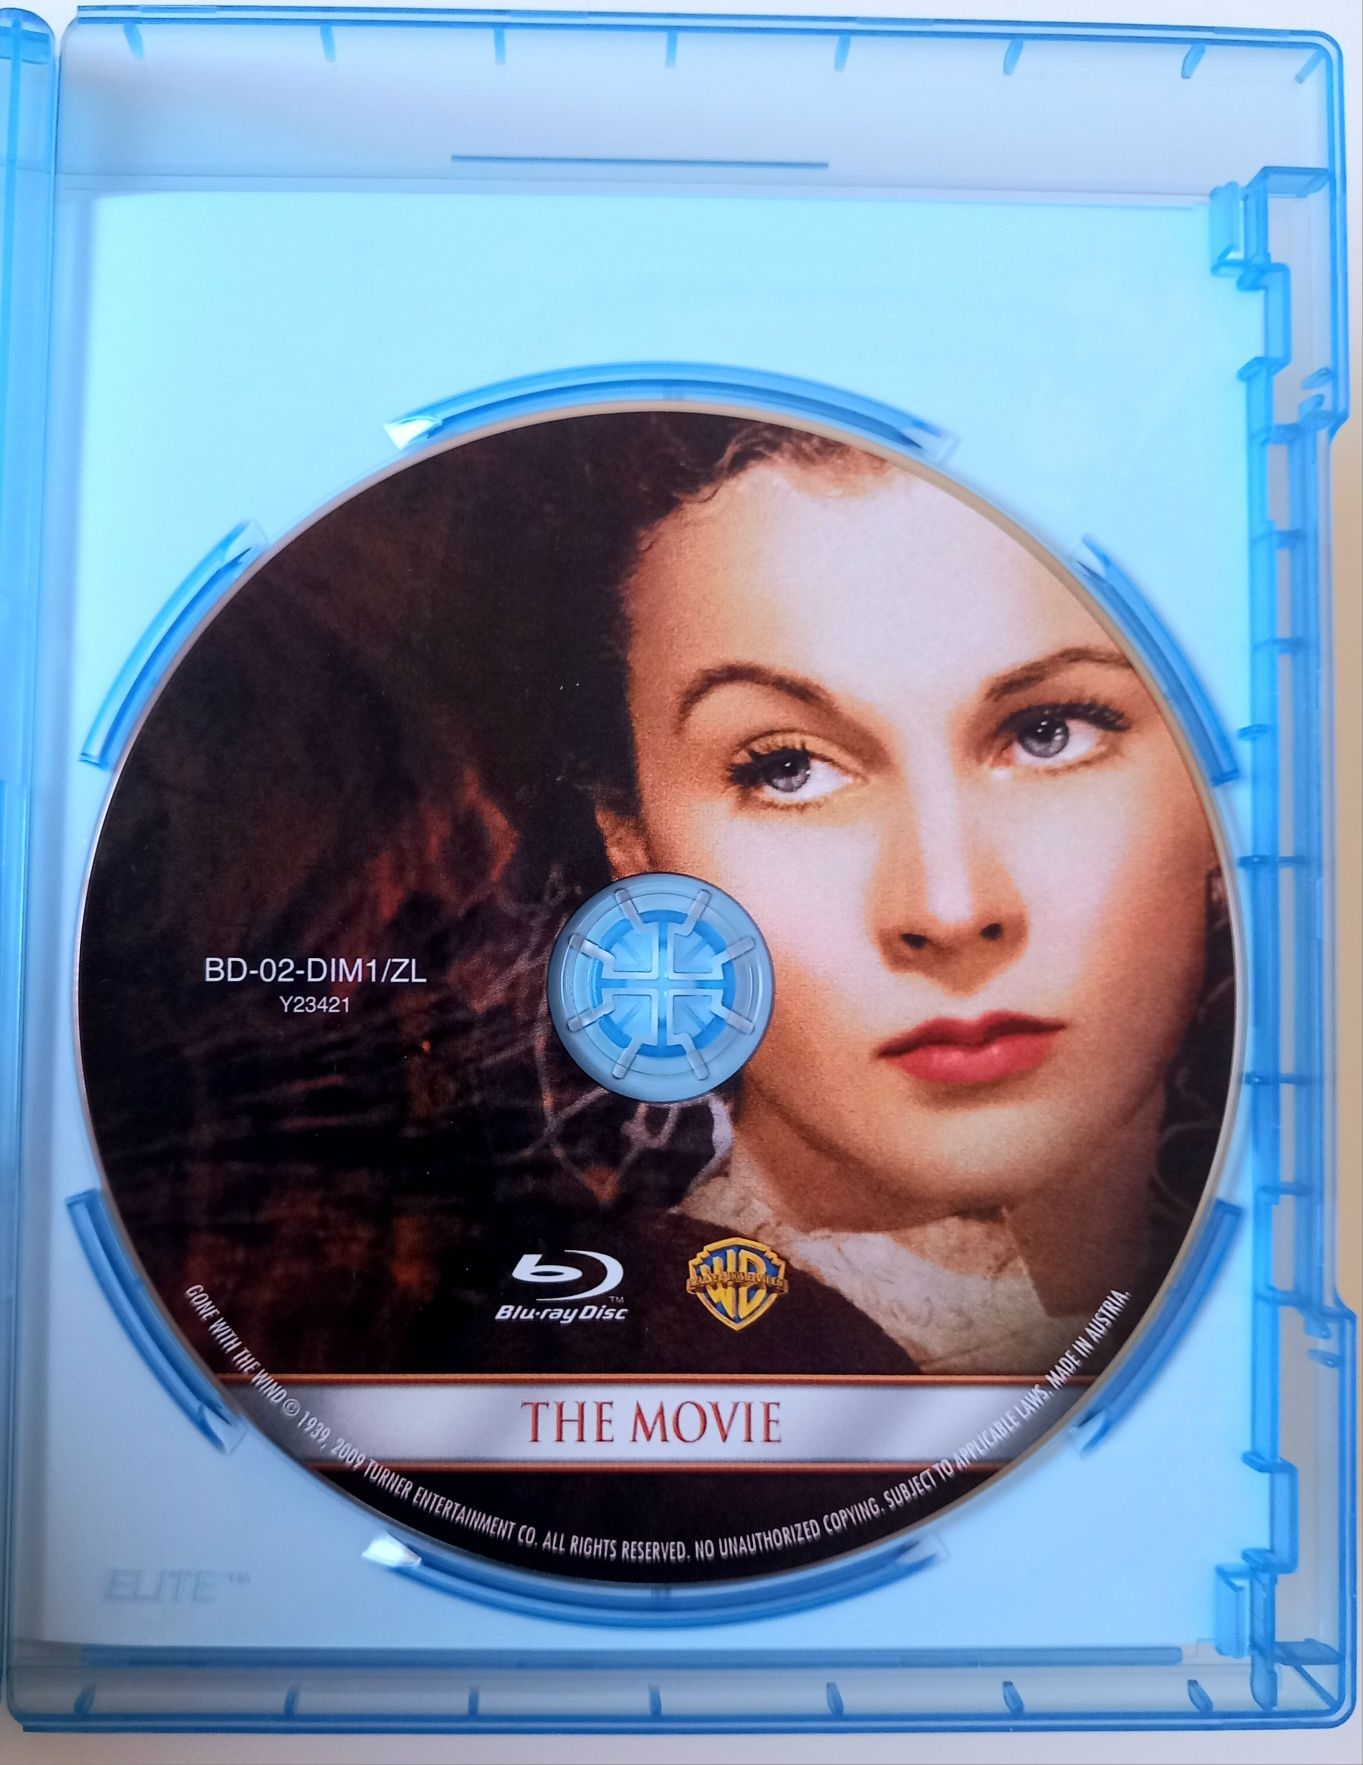 E Tudo o Vento Levou (1939) Blu-ray